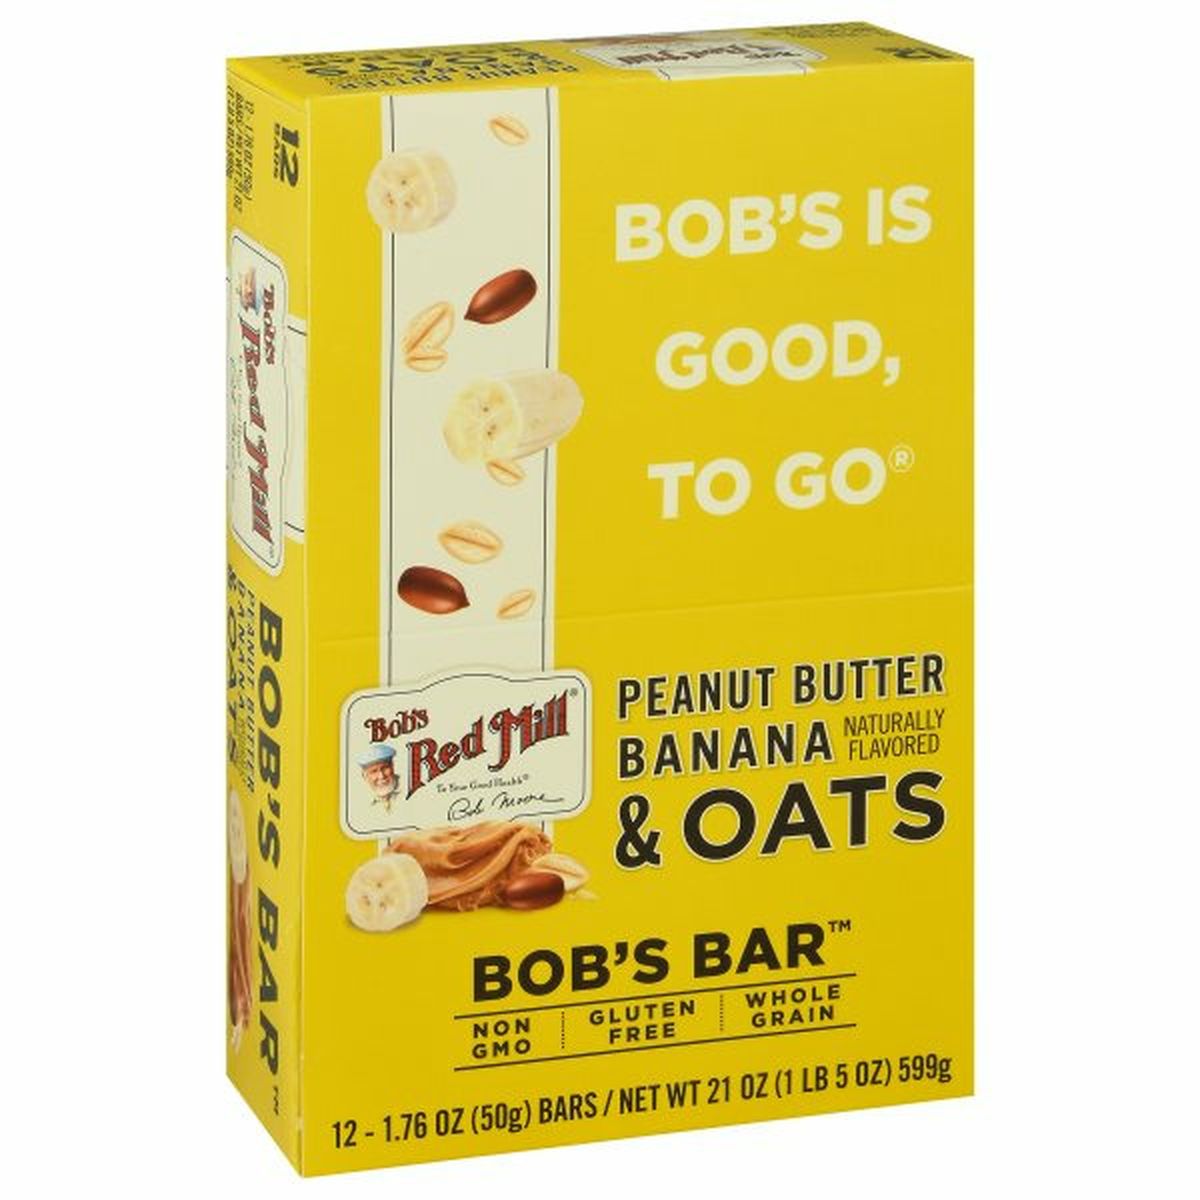 Calories in Bob's Red Mill Bob's Bar, Peanut Butter Banana & Oats